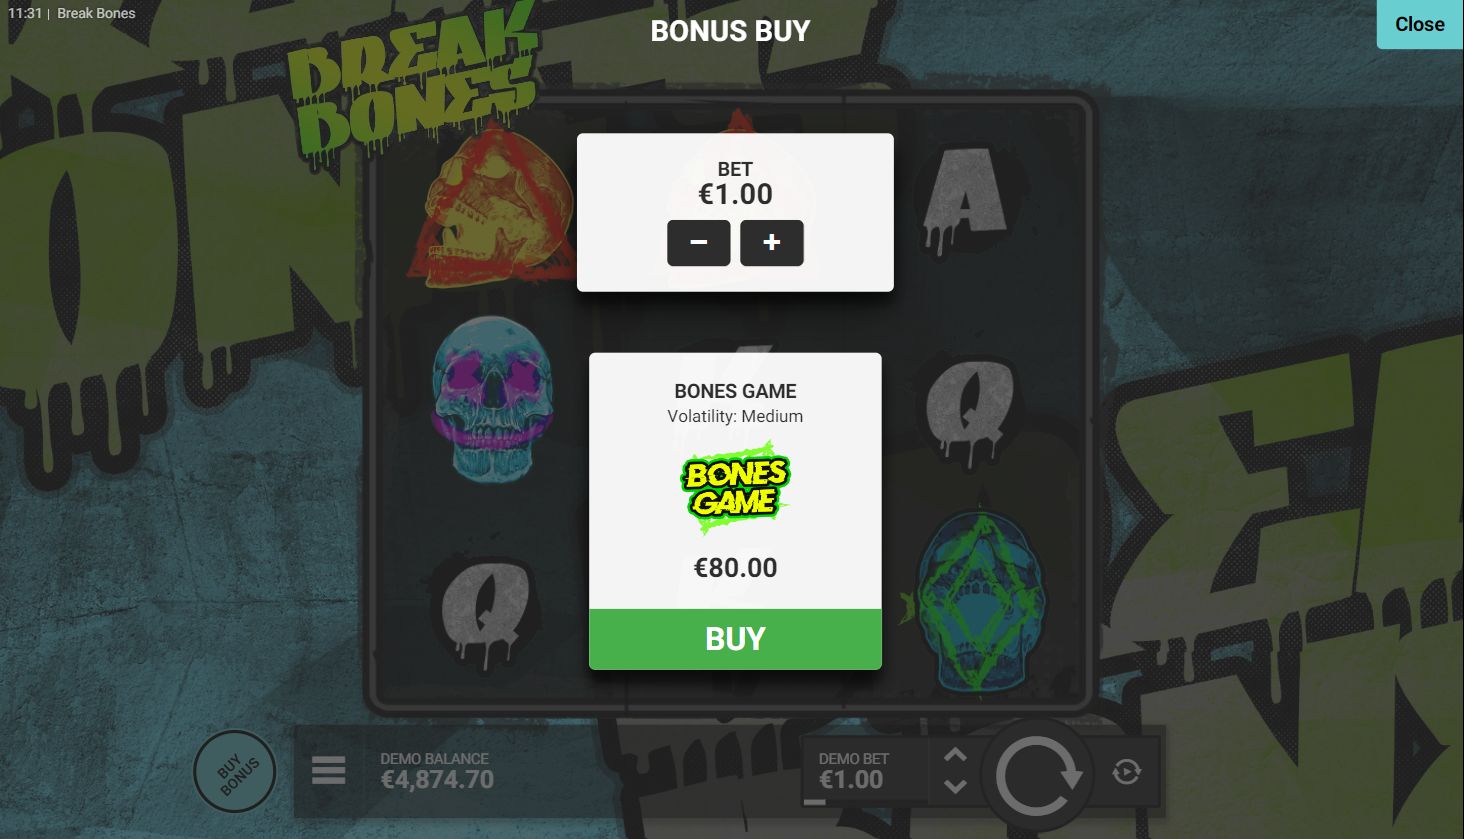 Break Bones Bonus Buy